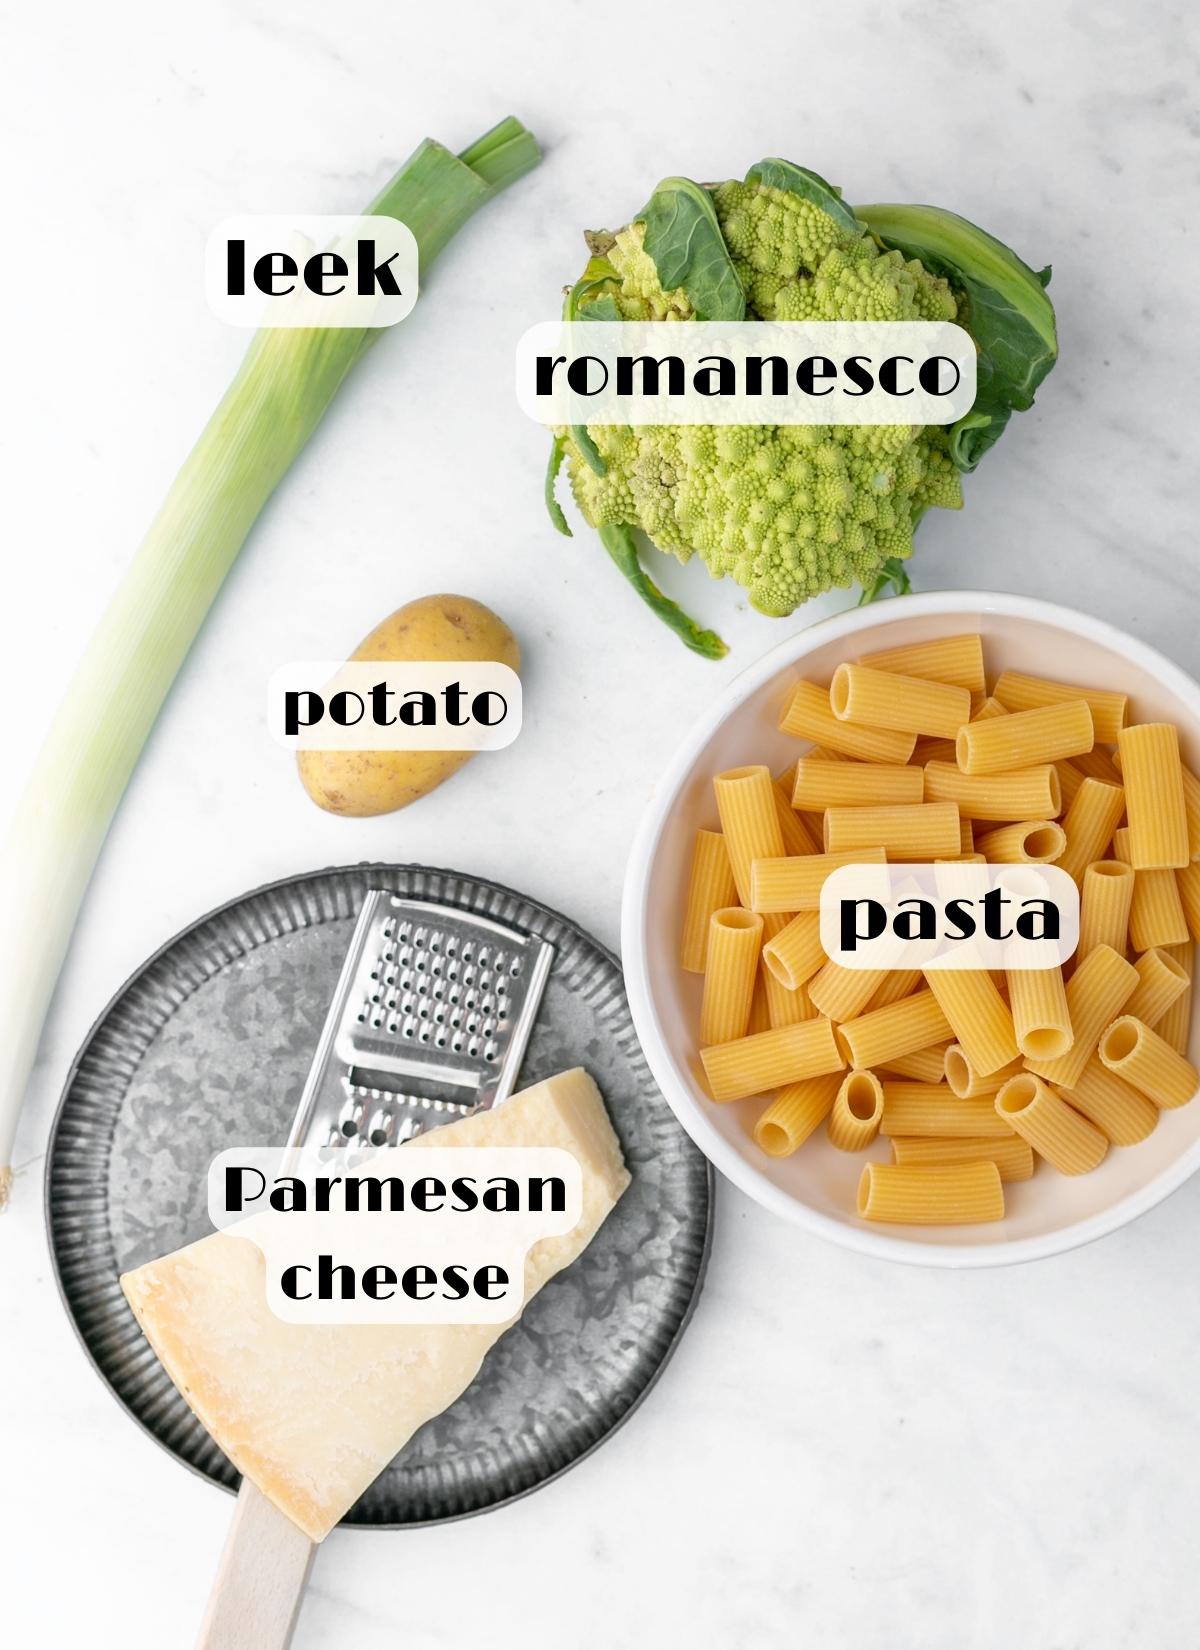 romanesco pasta recipe ingredients: pasta, romanesco broccoli, leek, potato and parmesan cheese.